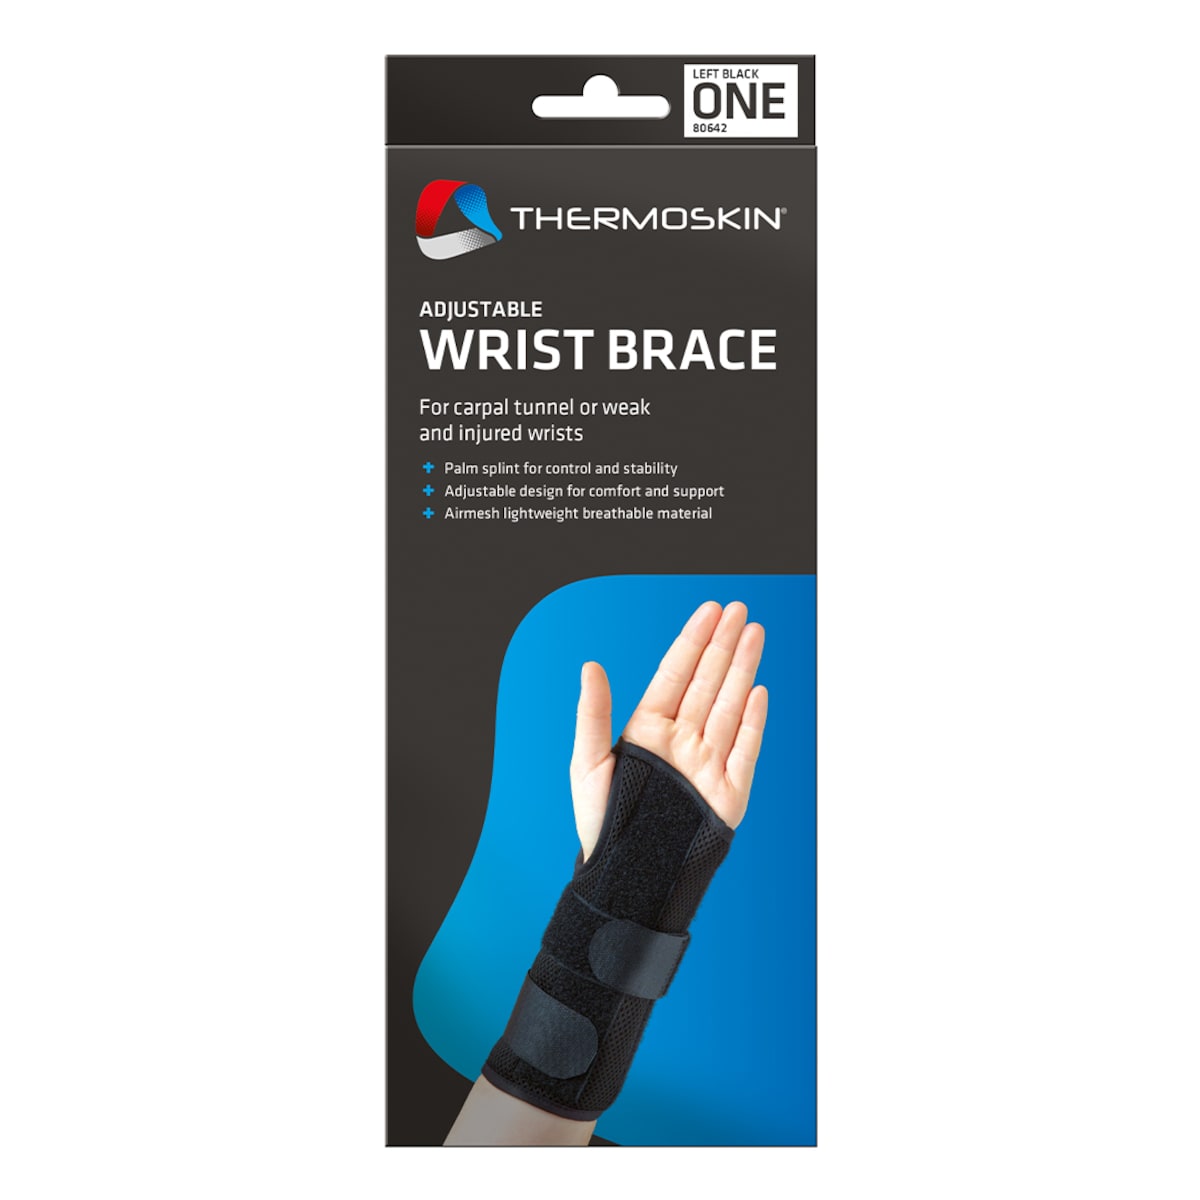 Thermoskin Adjustable Wrist Brace Left Hand One Size